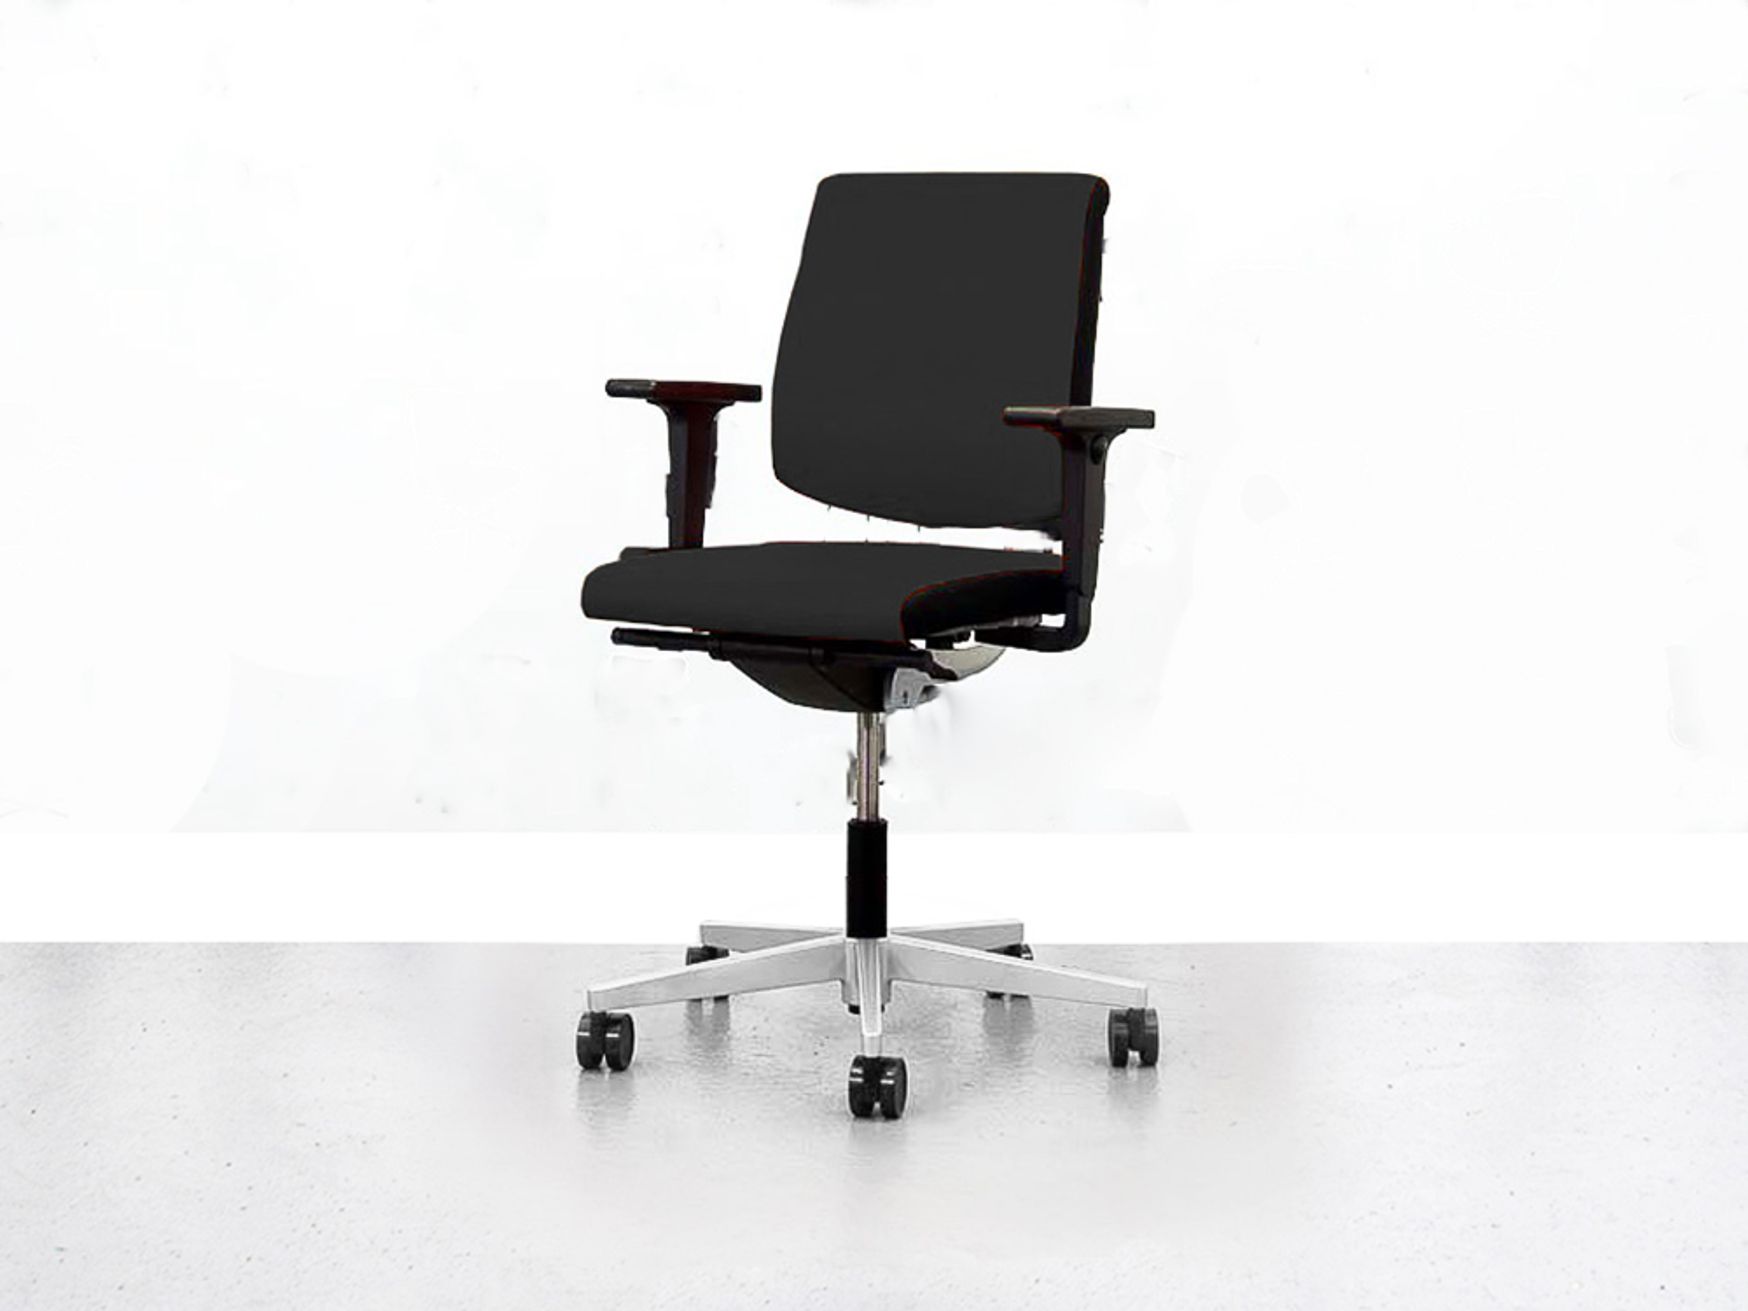 Refurbished Sedus Black Dot Operator Chairs in black